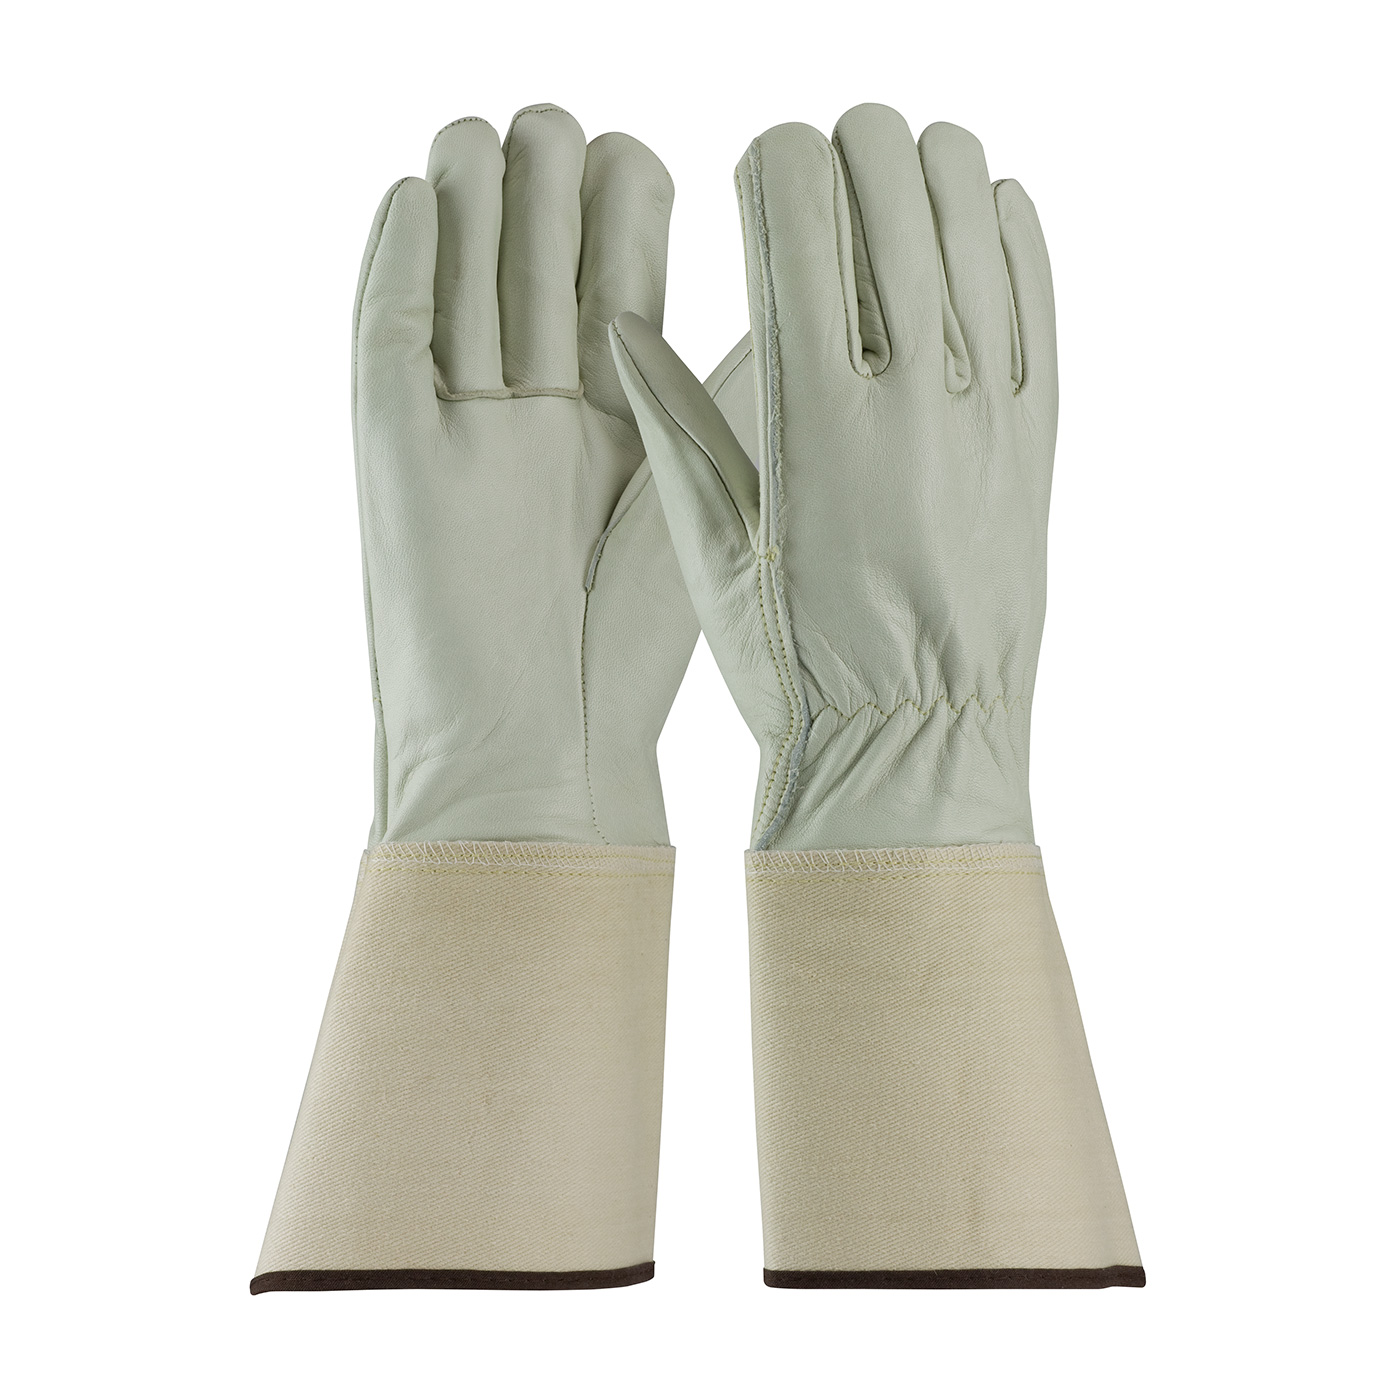 PIP®高级顶级谷物牛皮司机手套与塑化手套袖口-直拇指#68-101G